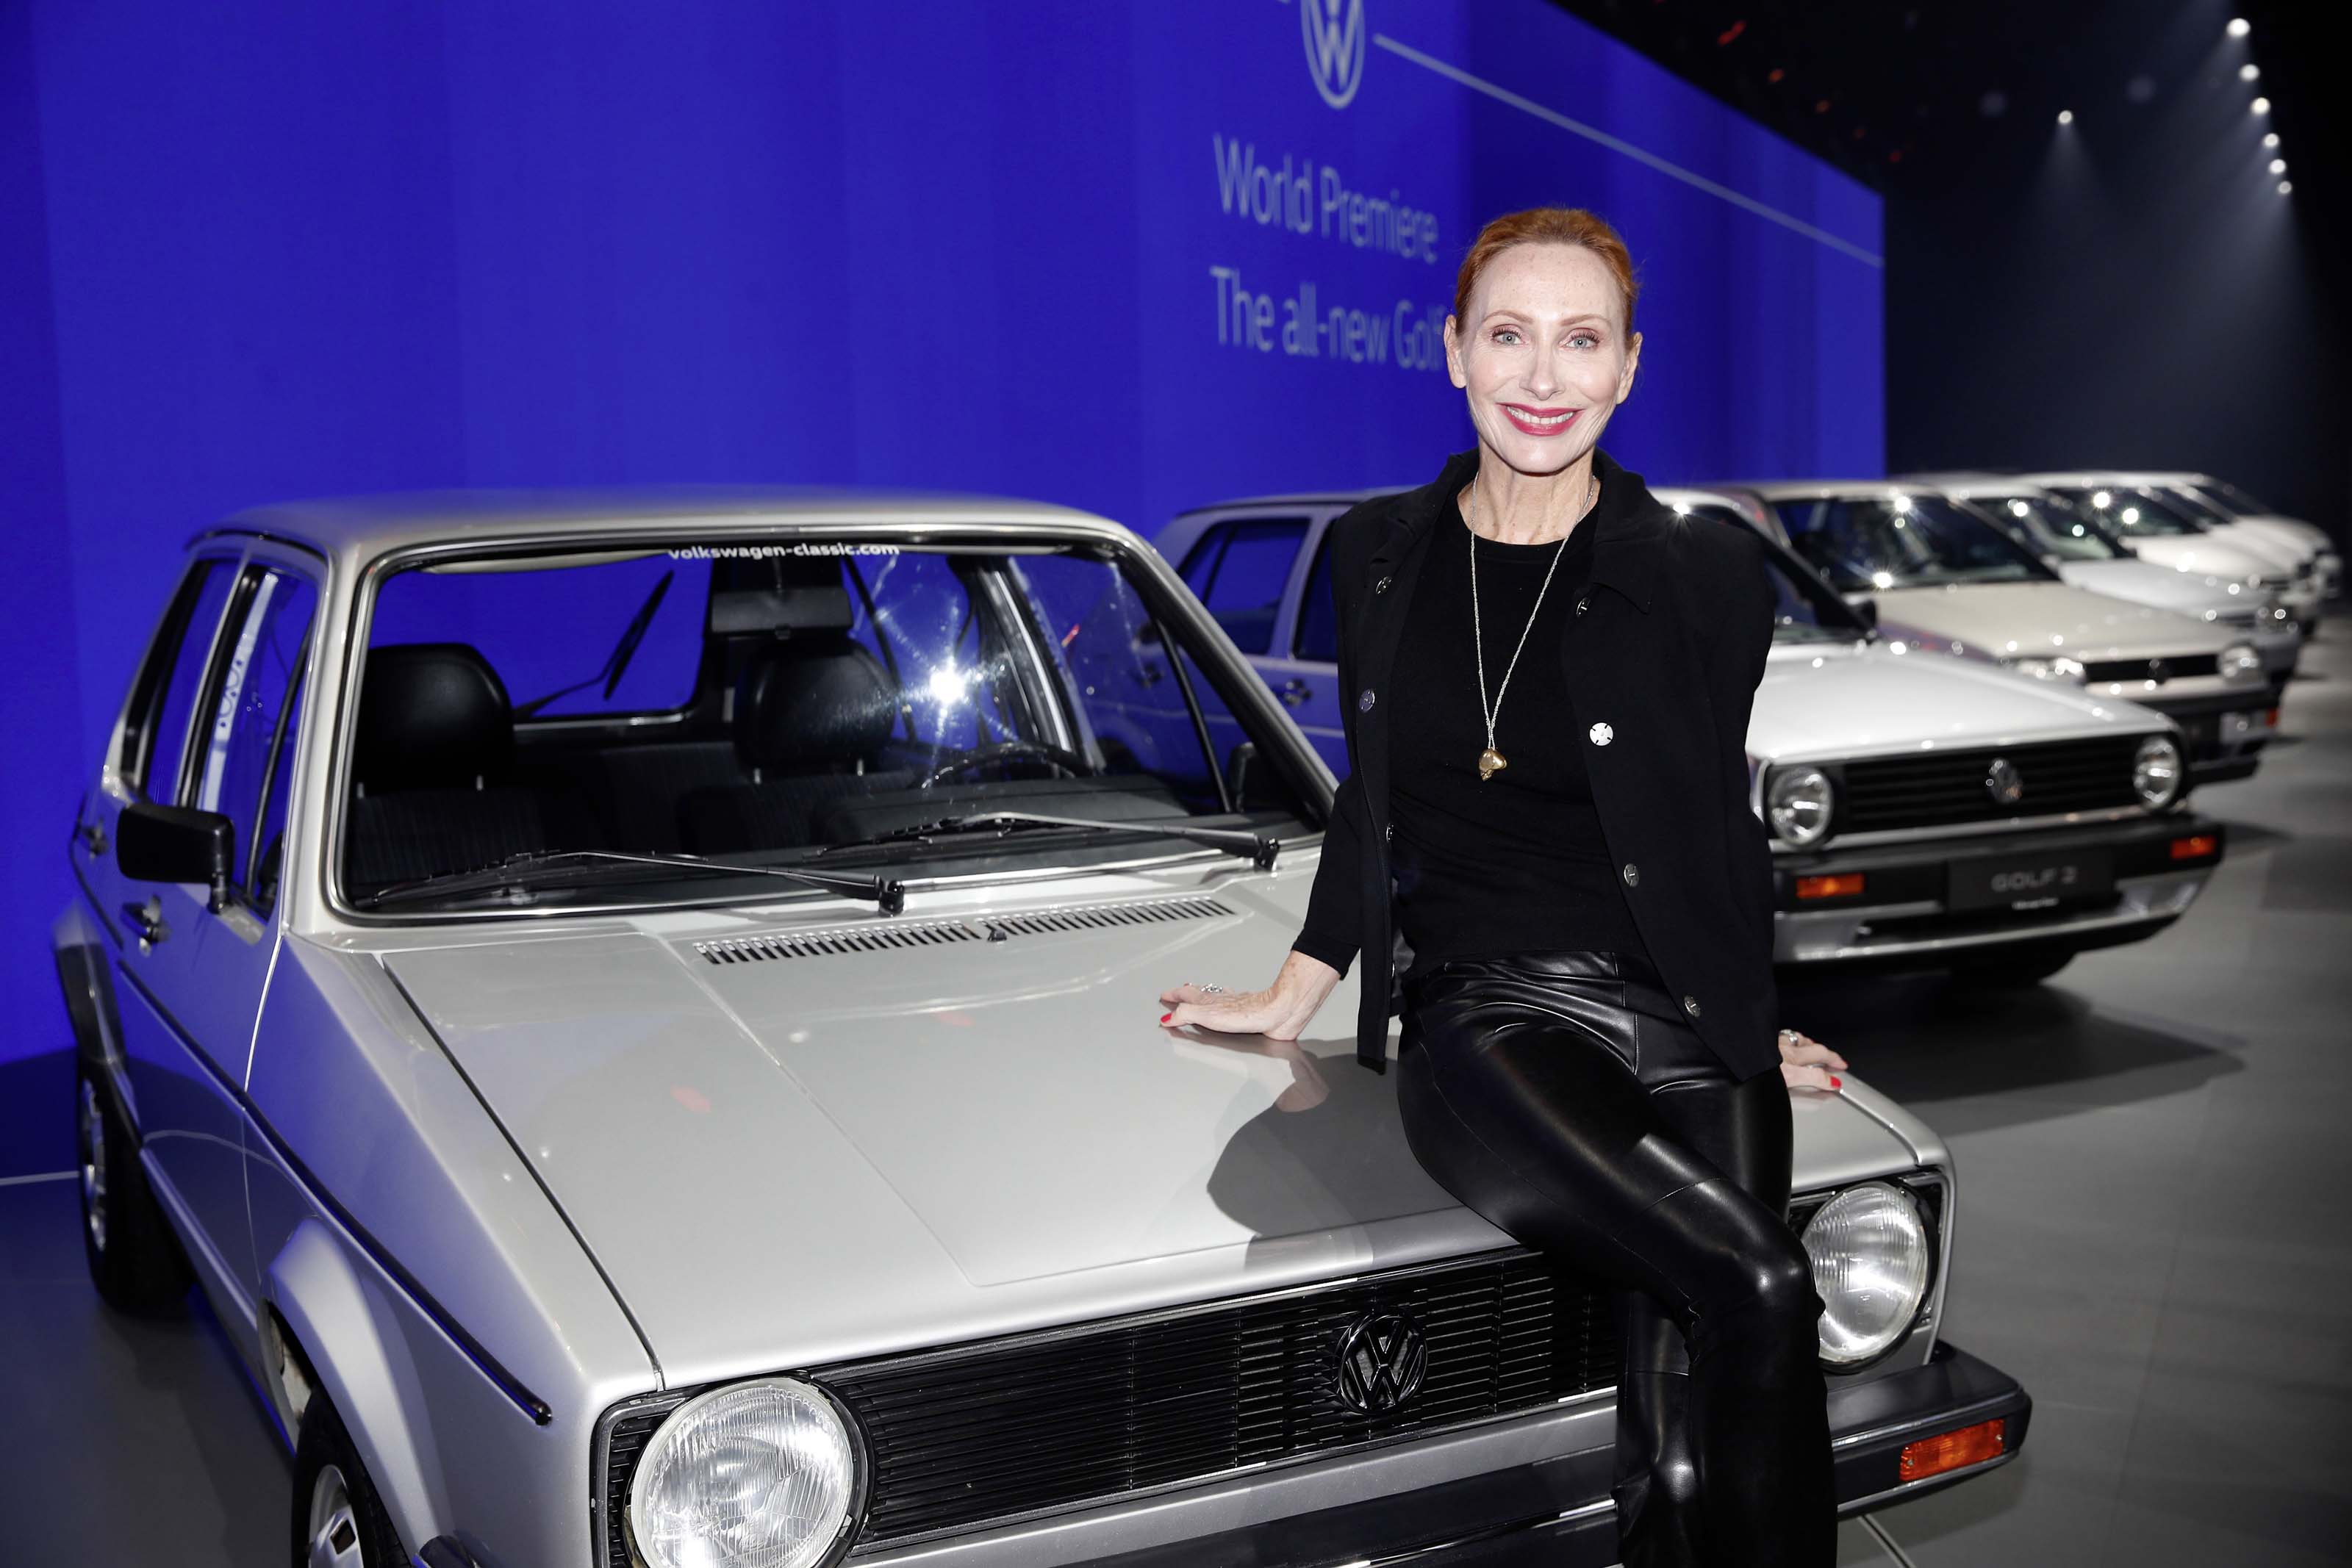 Andrea Sawatzki attends VW Golf 8 Presentation